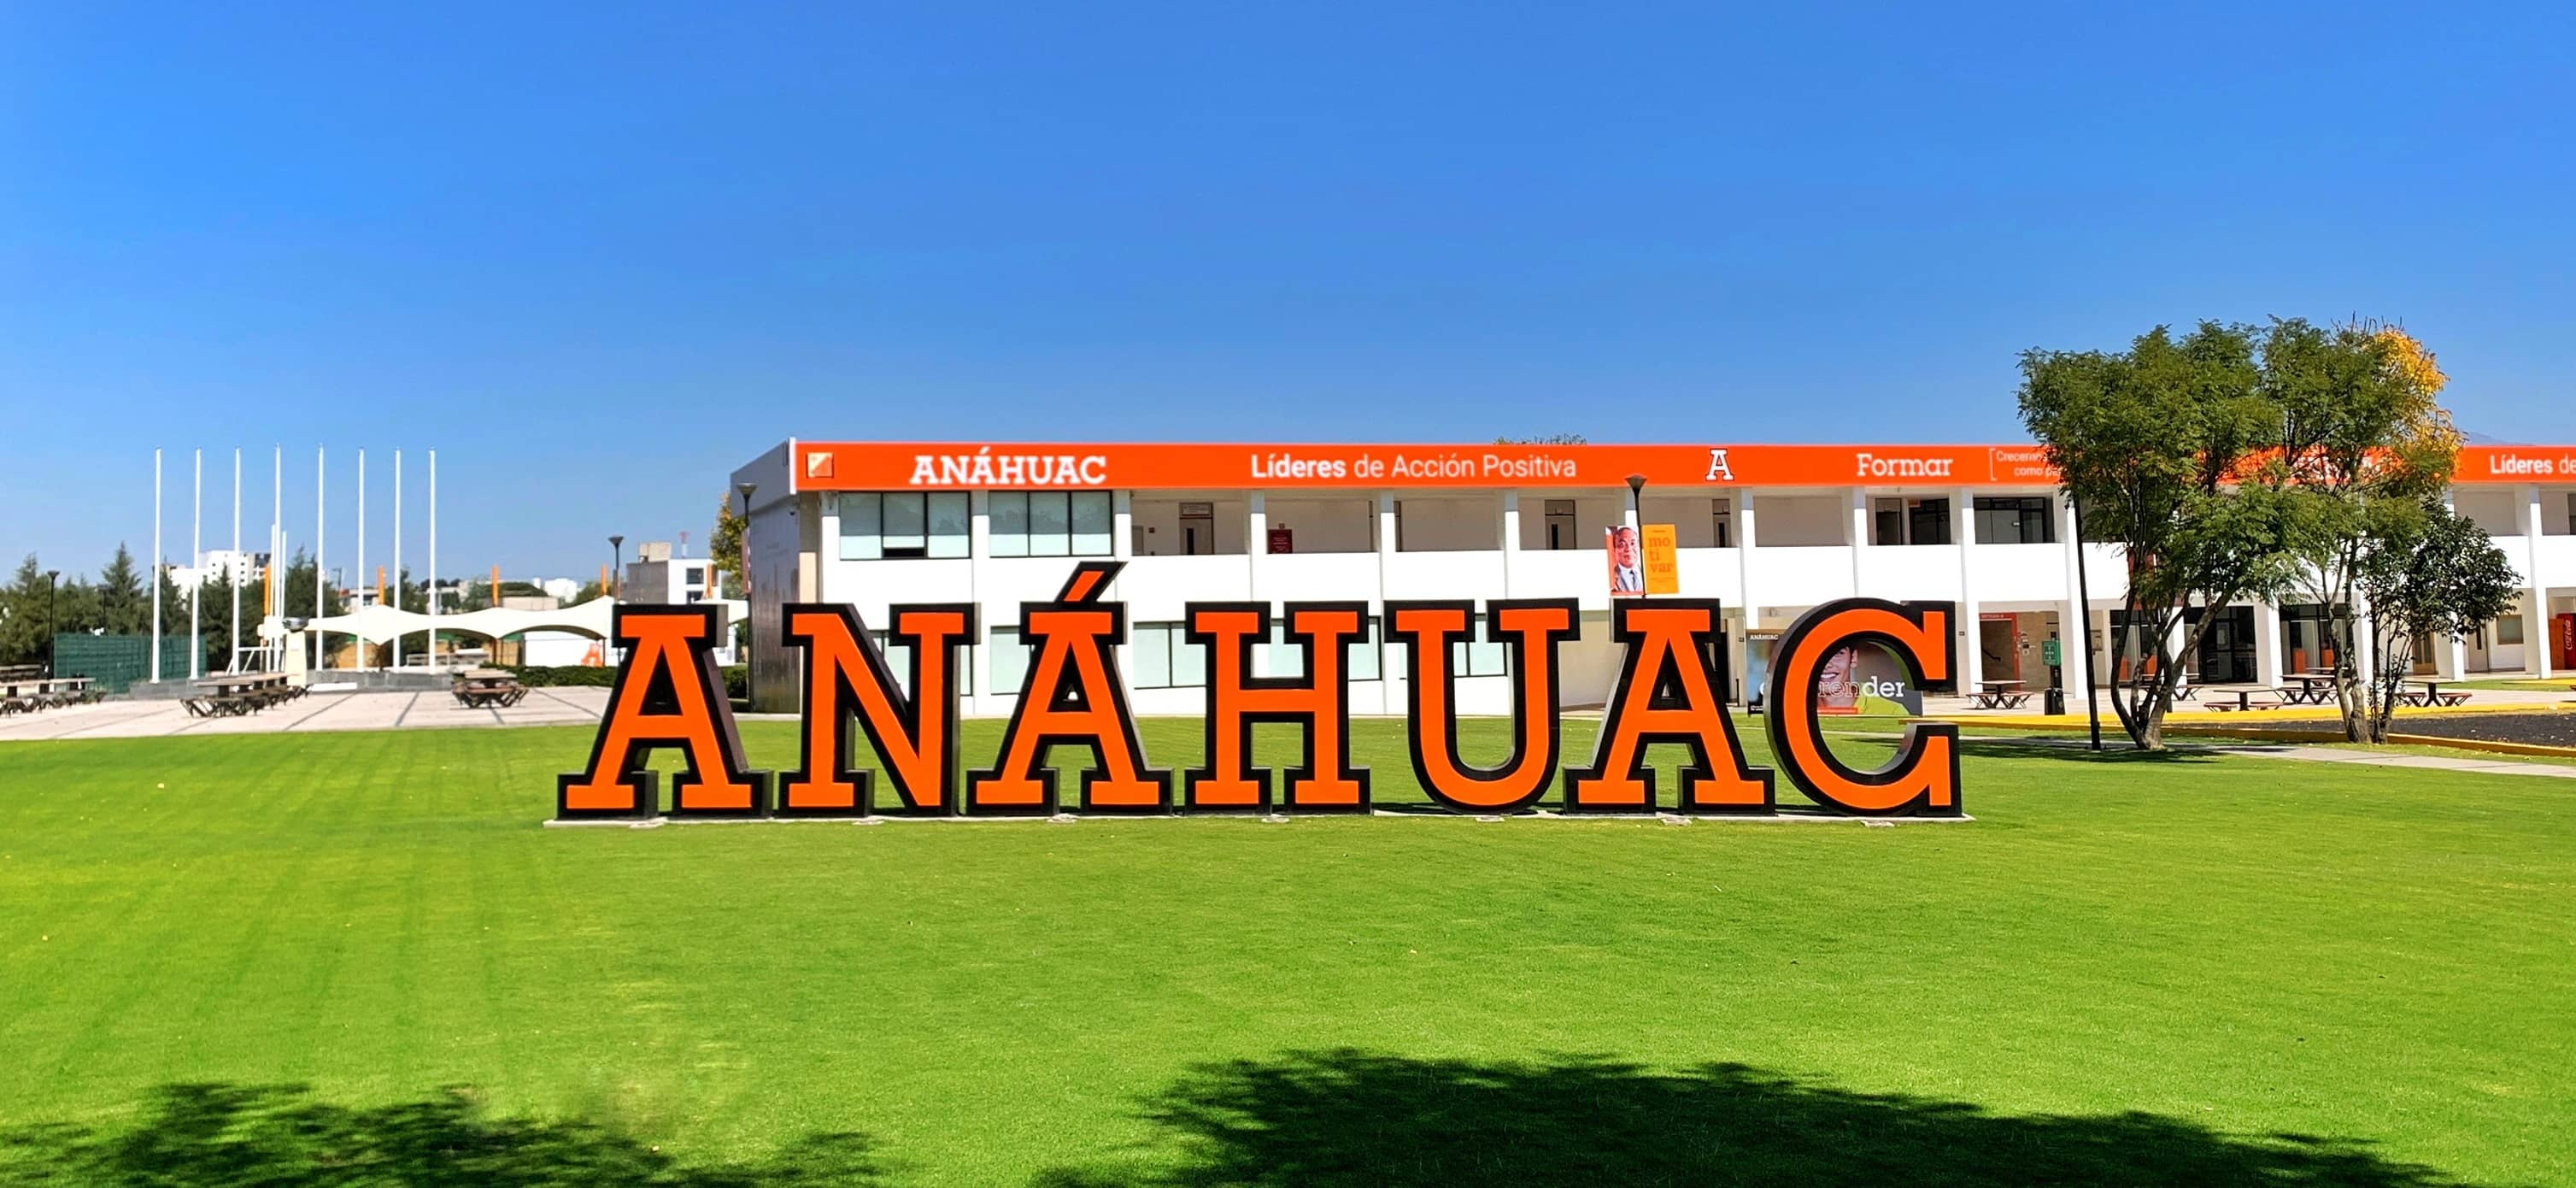 Anahuac-Puebla